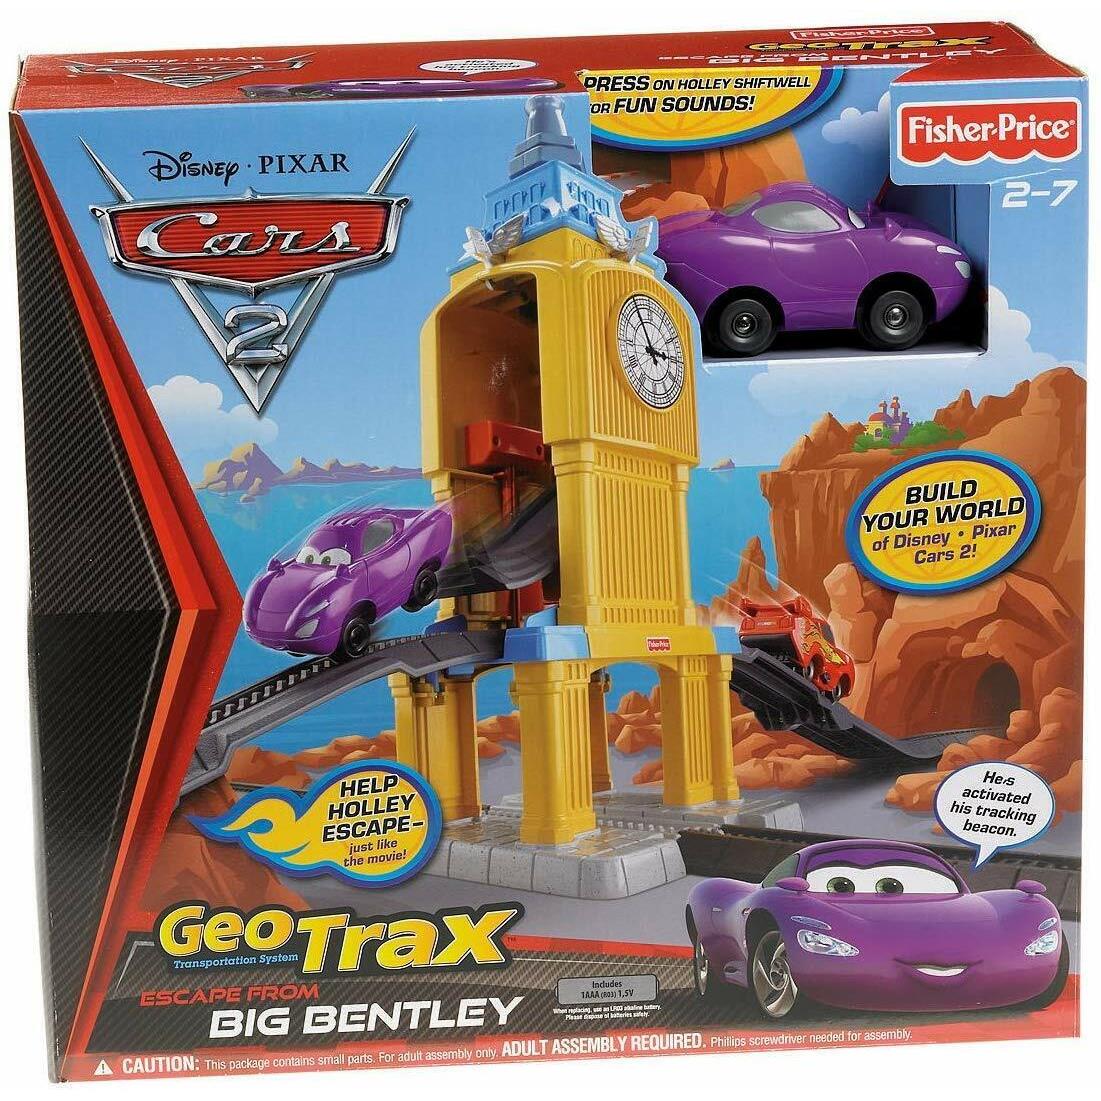 Fisher-price Geo Trax Disney Pixar Cars 2 Escape From Big Bentley 2-7